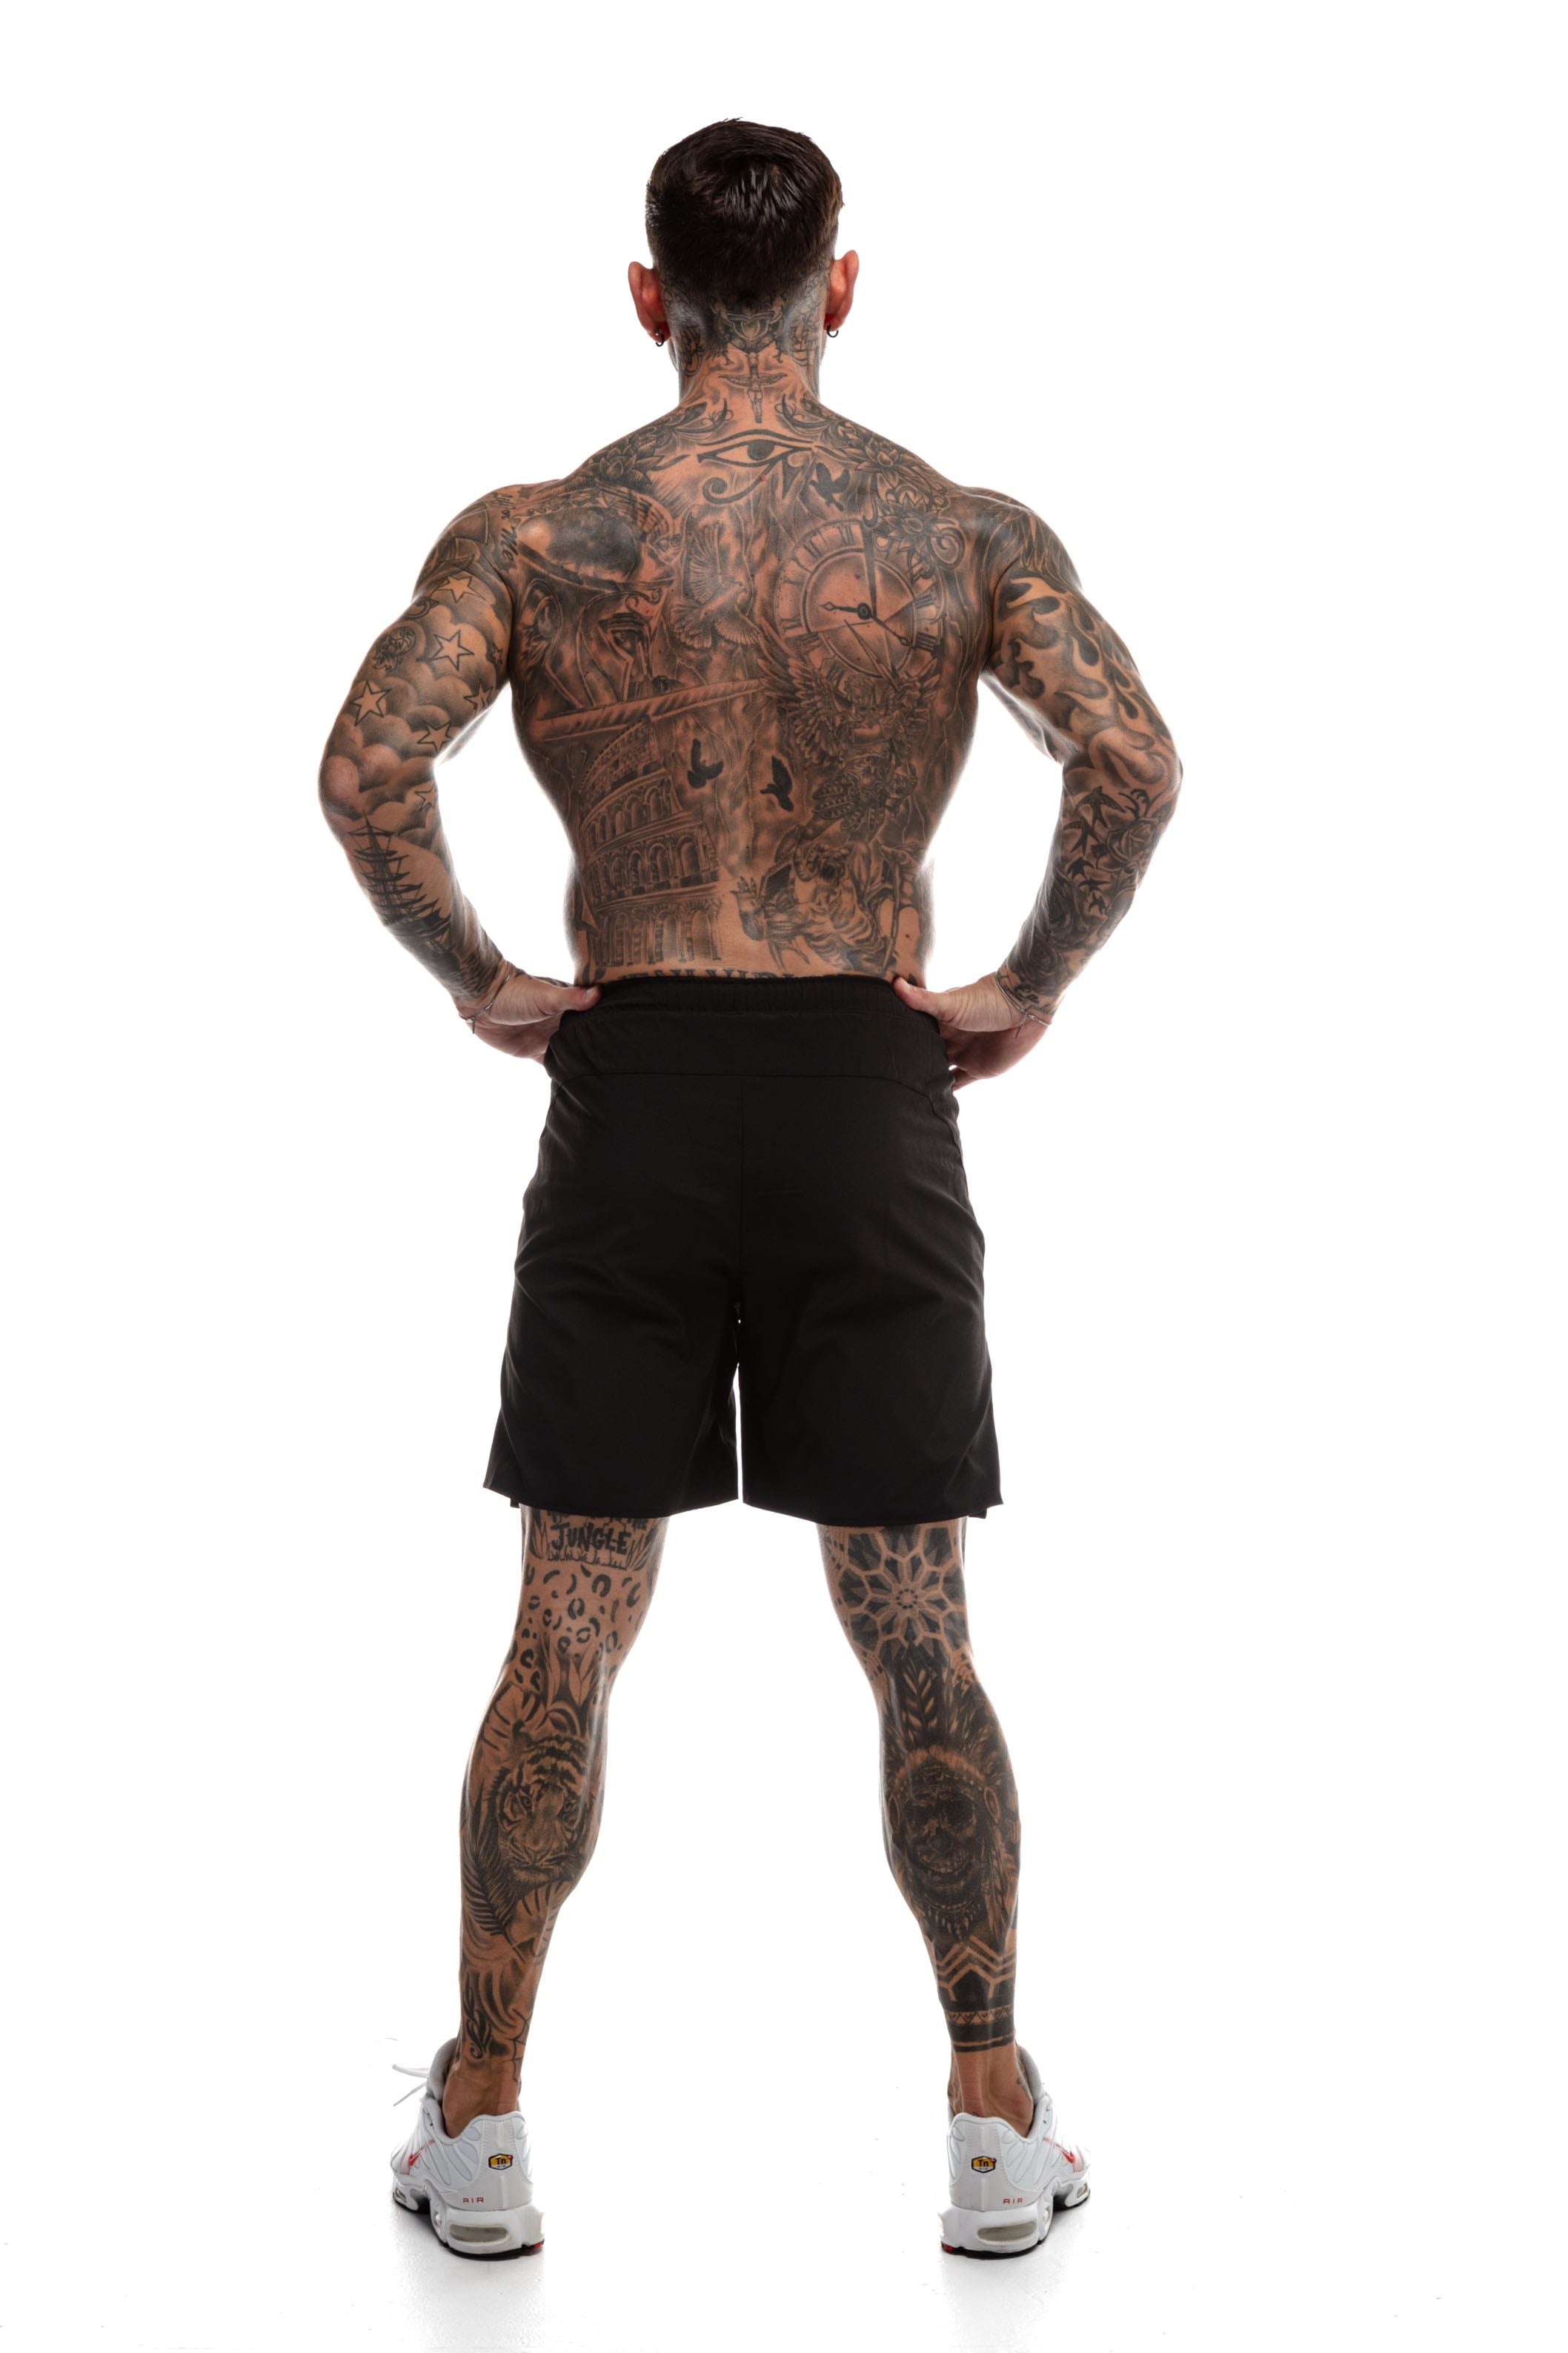 GymFreak Mens Fusion Shorts - Black - 7 inch